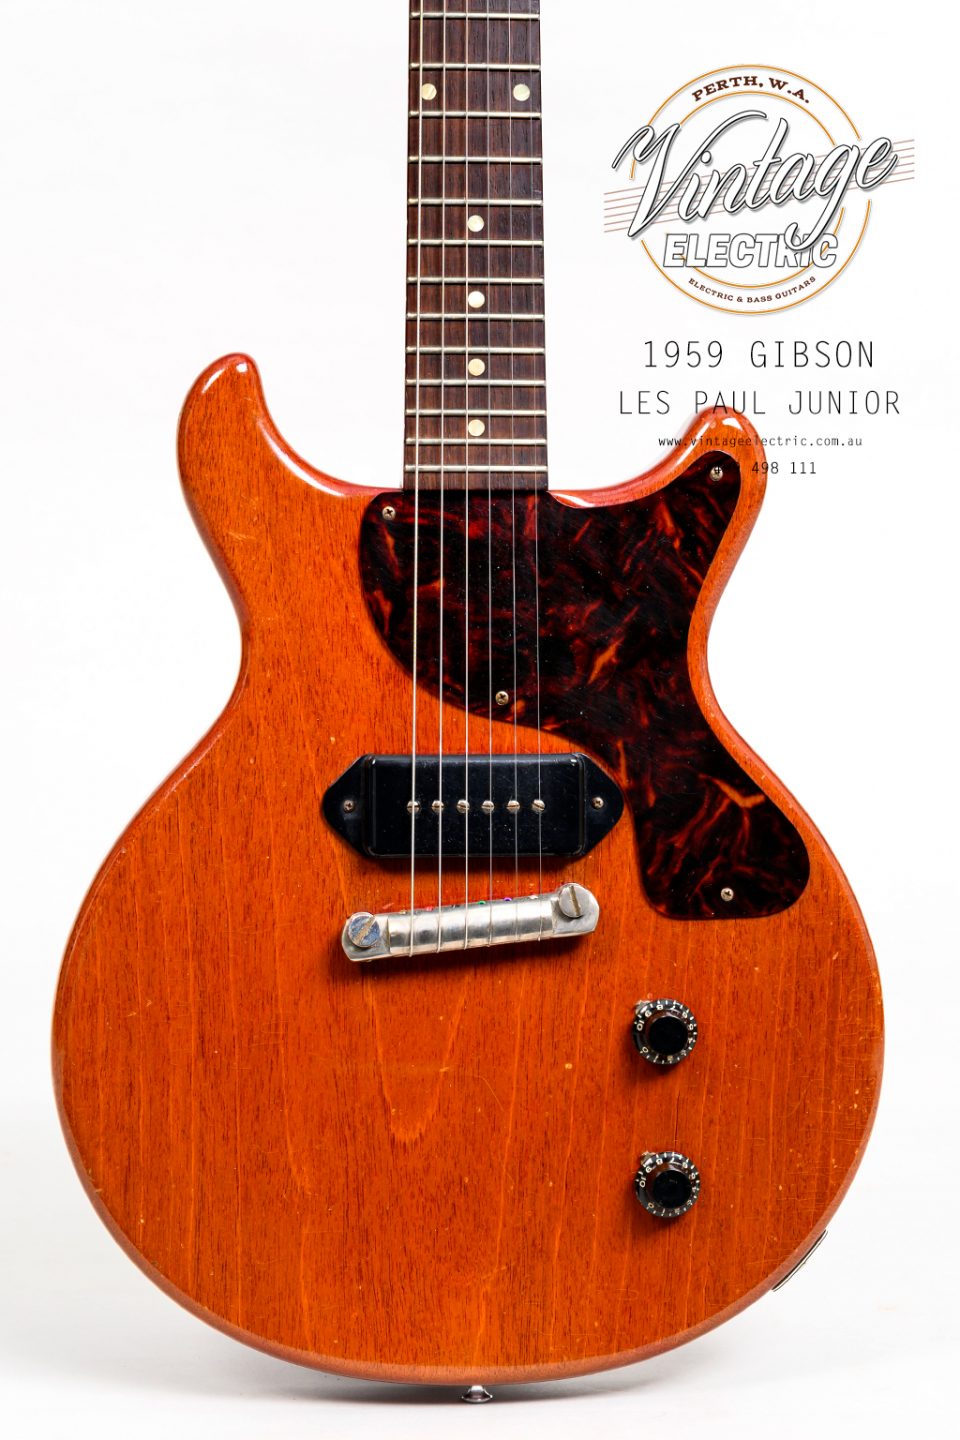 1959 Gibson Les Paul Jr Doublecut Body